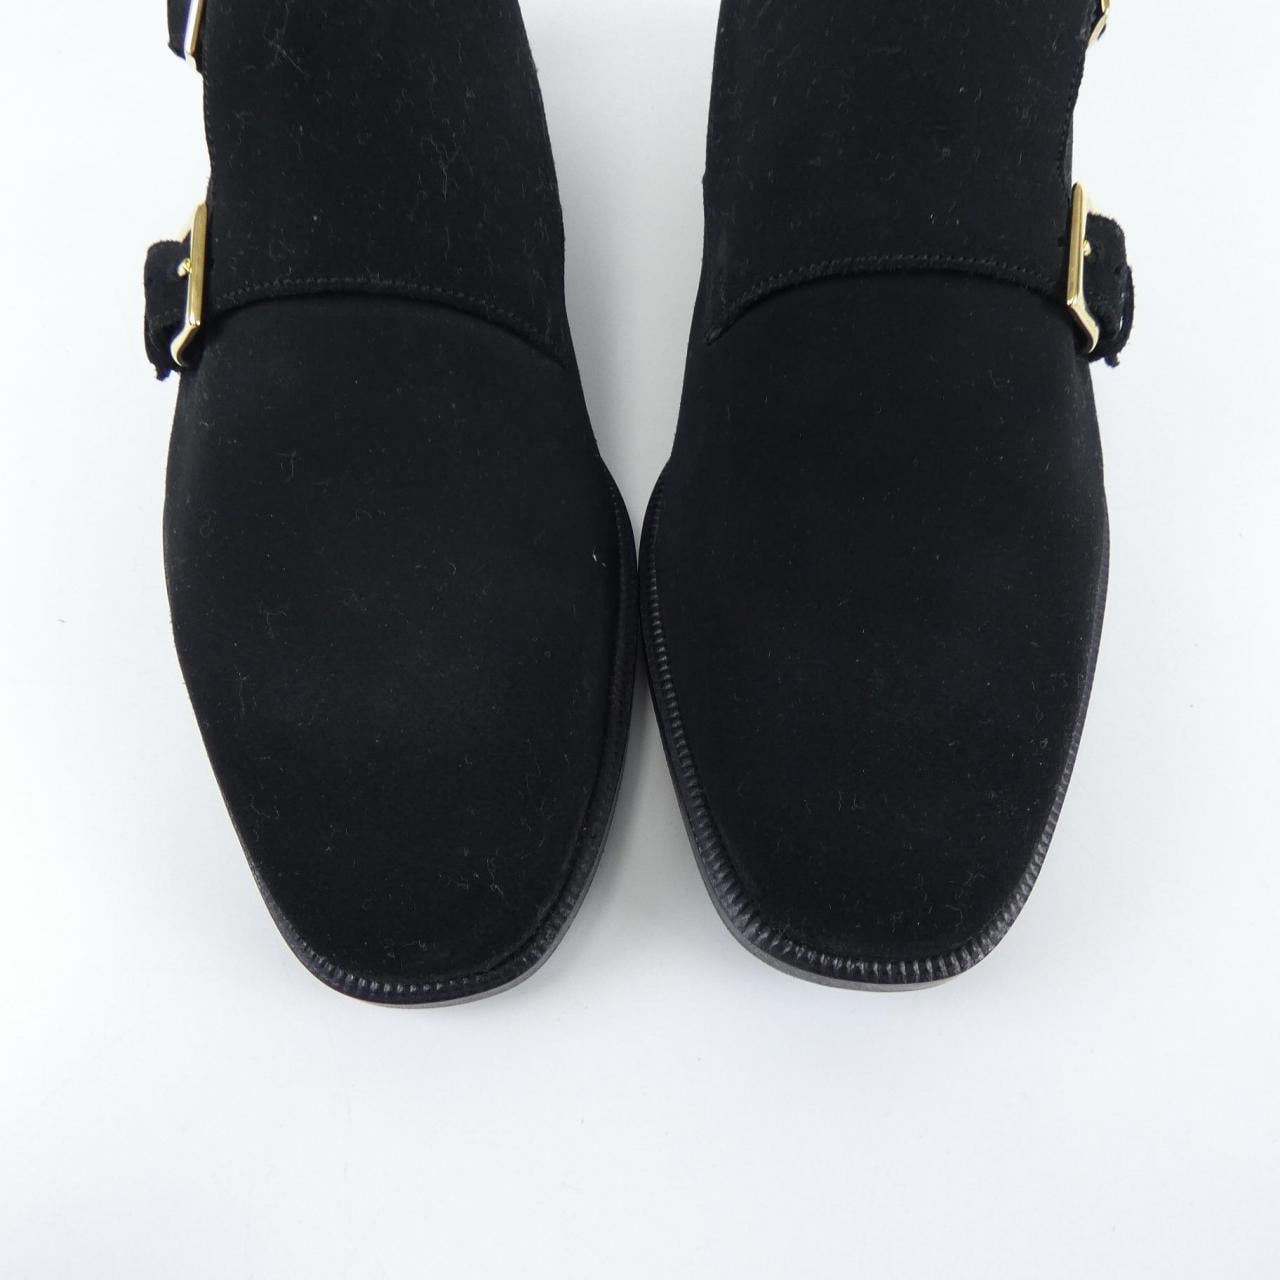 Enzo.Bonafe dress shoes